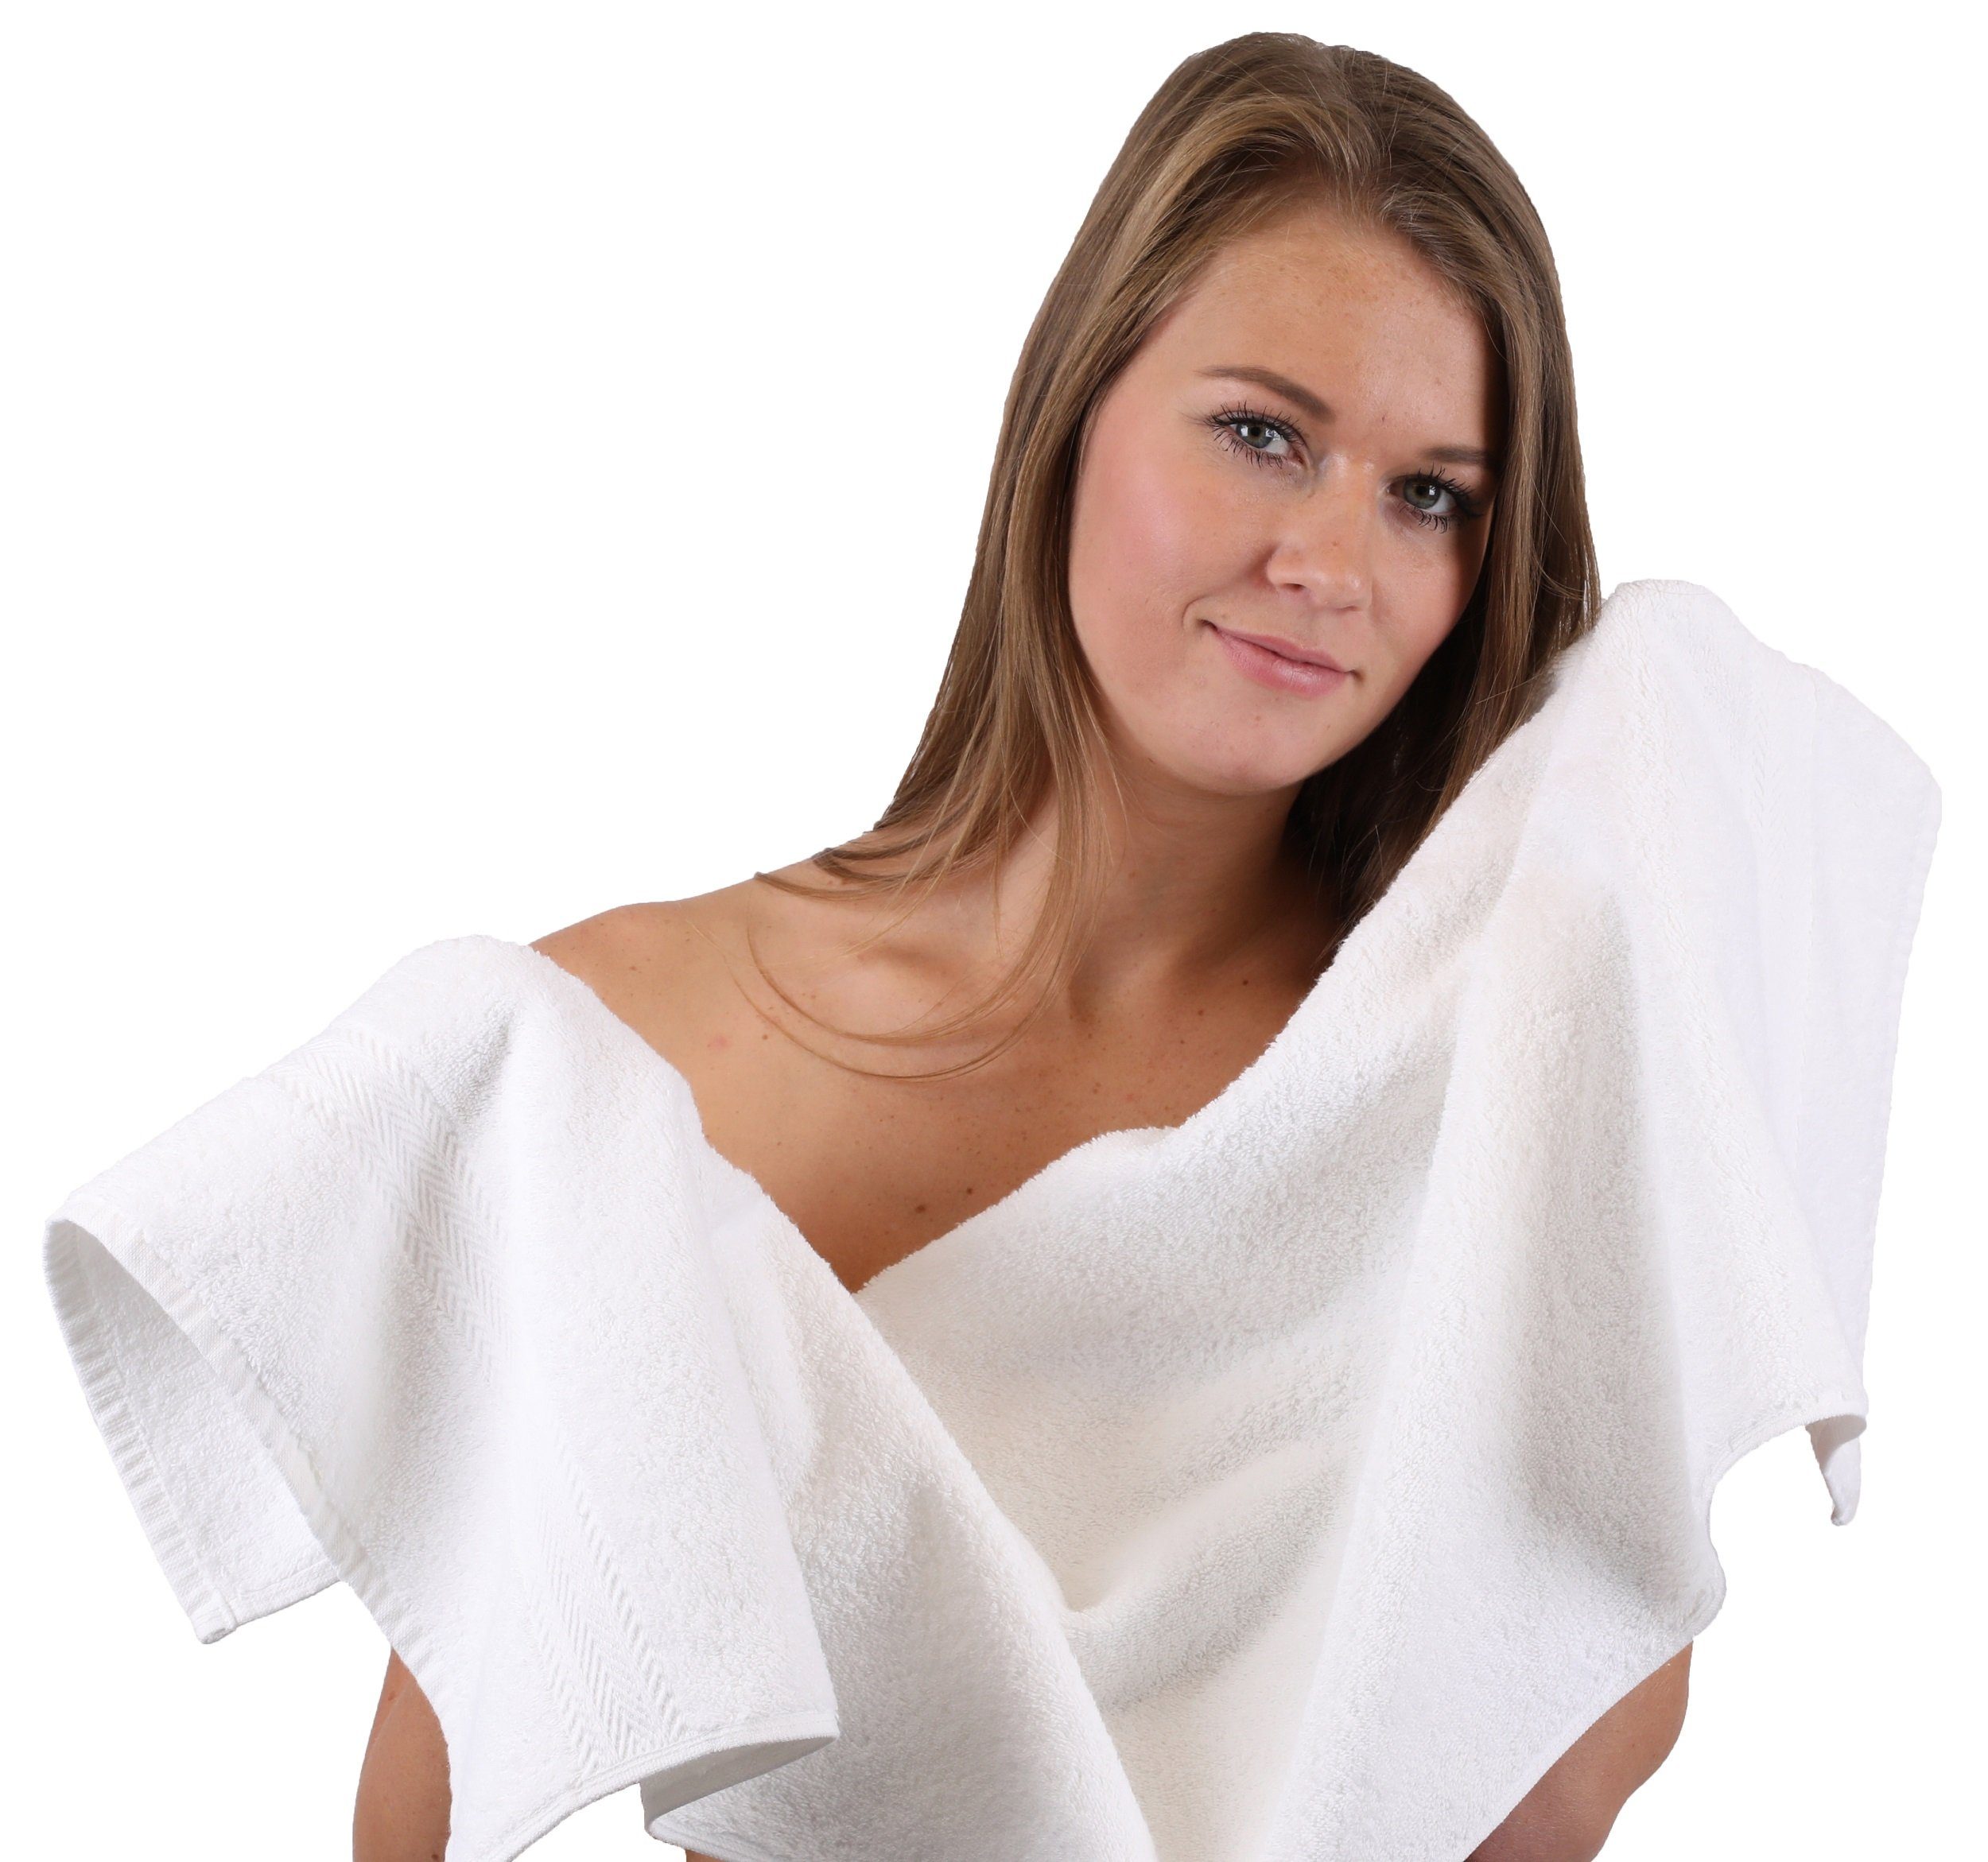 Handtücher 4 Handtücher Farbe Stück Betz apfelgrün, Baumwolle Handtücher weiß und Premium 100% 4